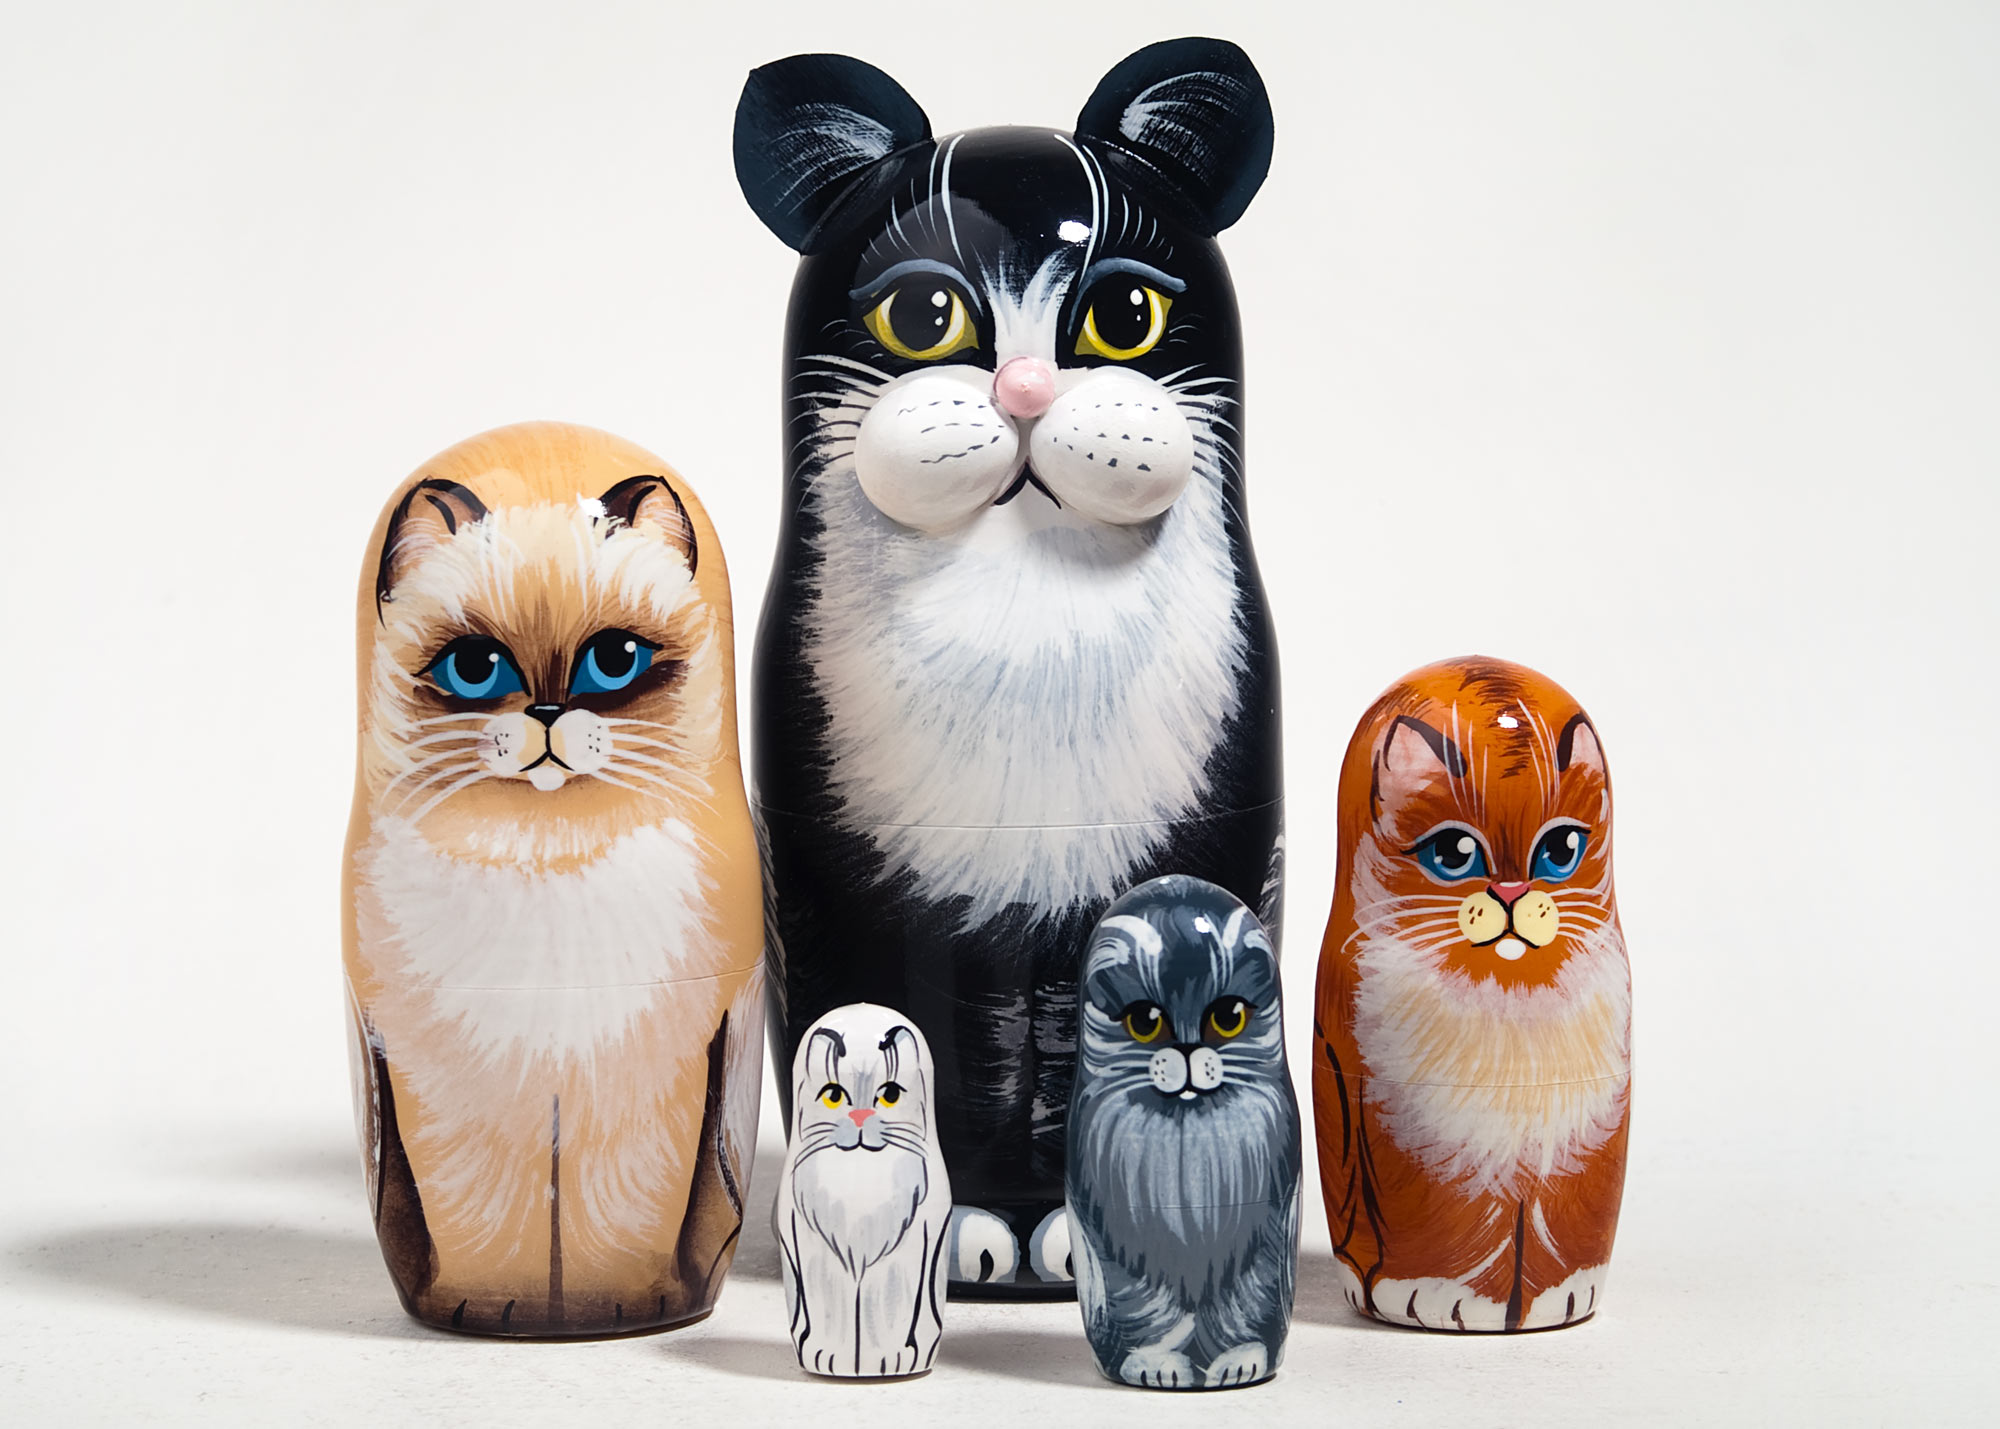 Buy Black & White Cat Nesting Doll 5pc./5"  at GoldenCockerel.com